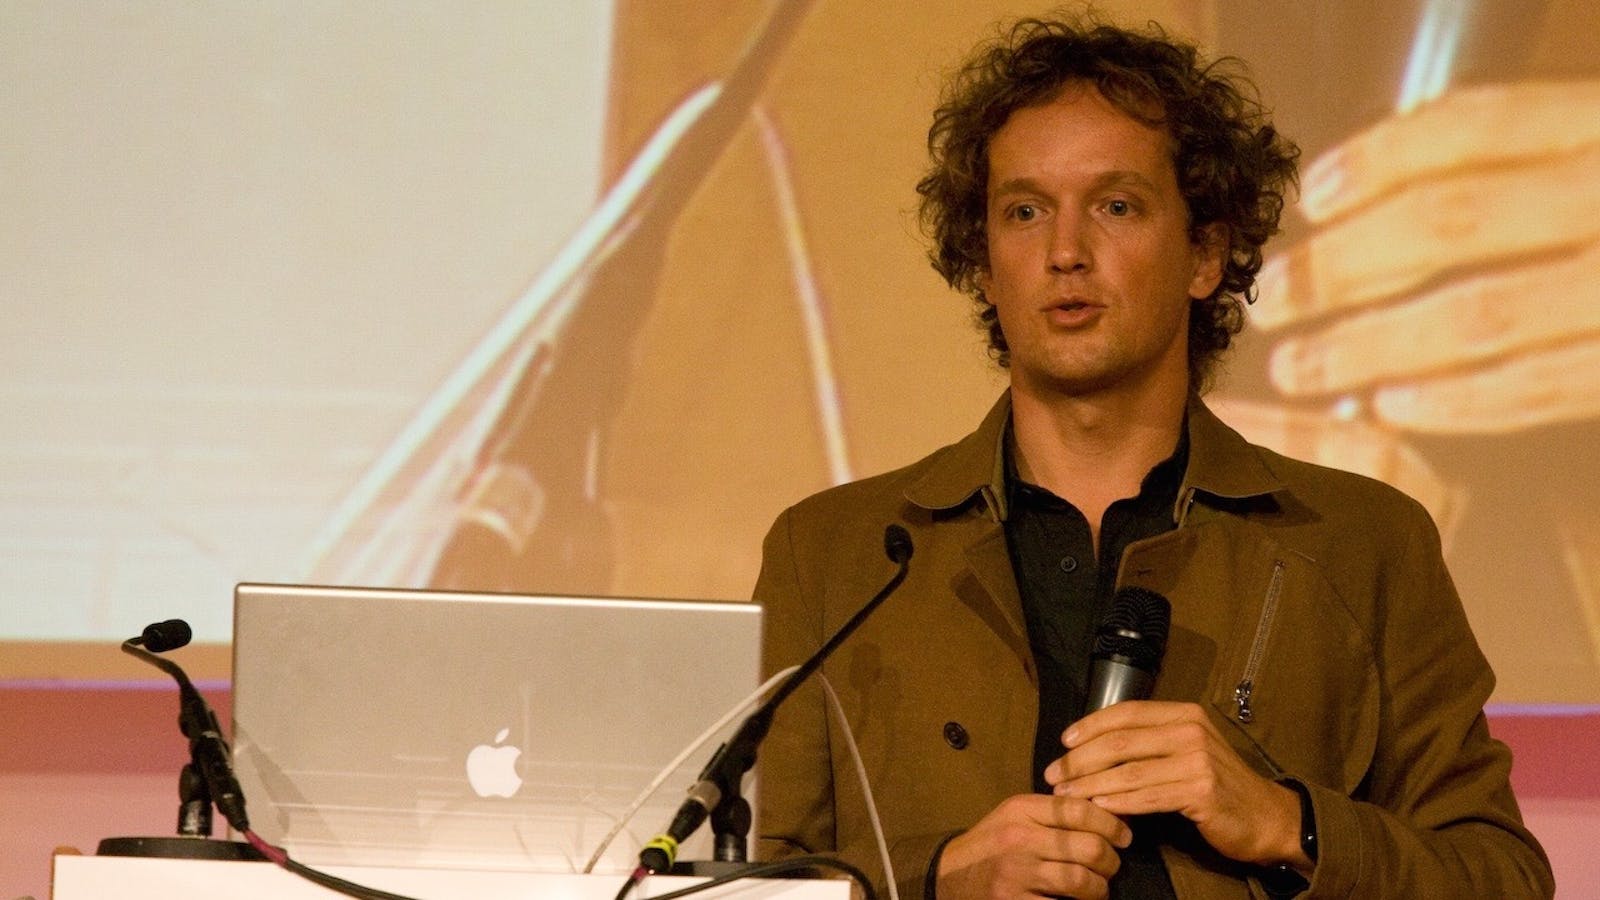 August Home co-founder Yves Behar. Photo by Flickr/Eirik Solheim.